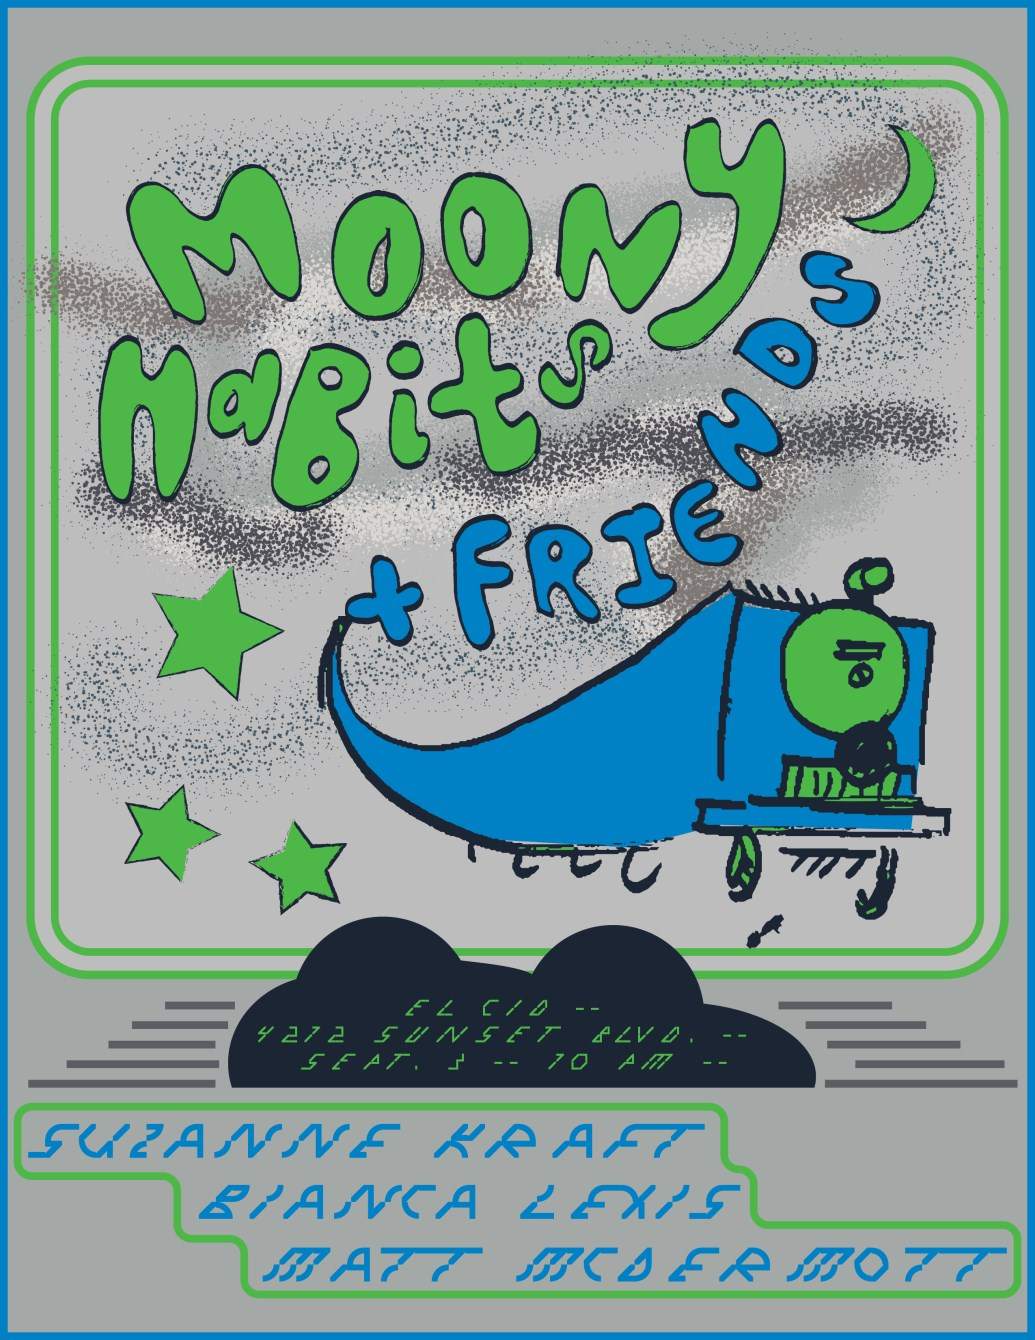 Moony Habits with Suzanne Kraft, Bianca Lexis & Matt Mcdermott - Página frontal